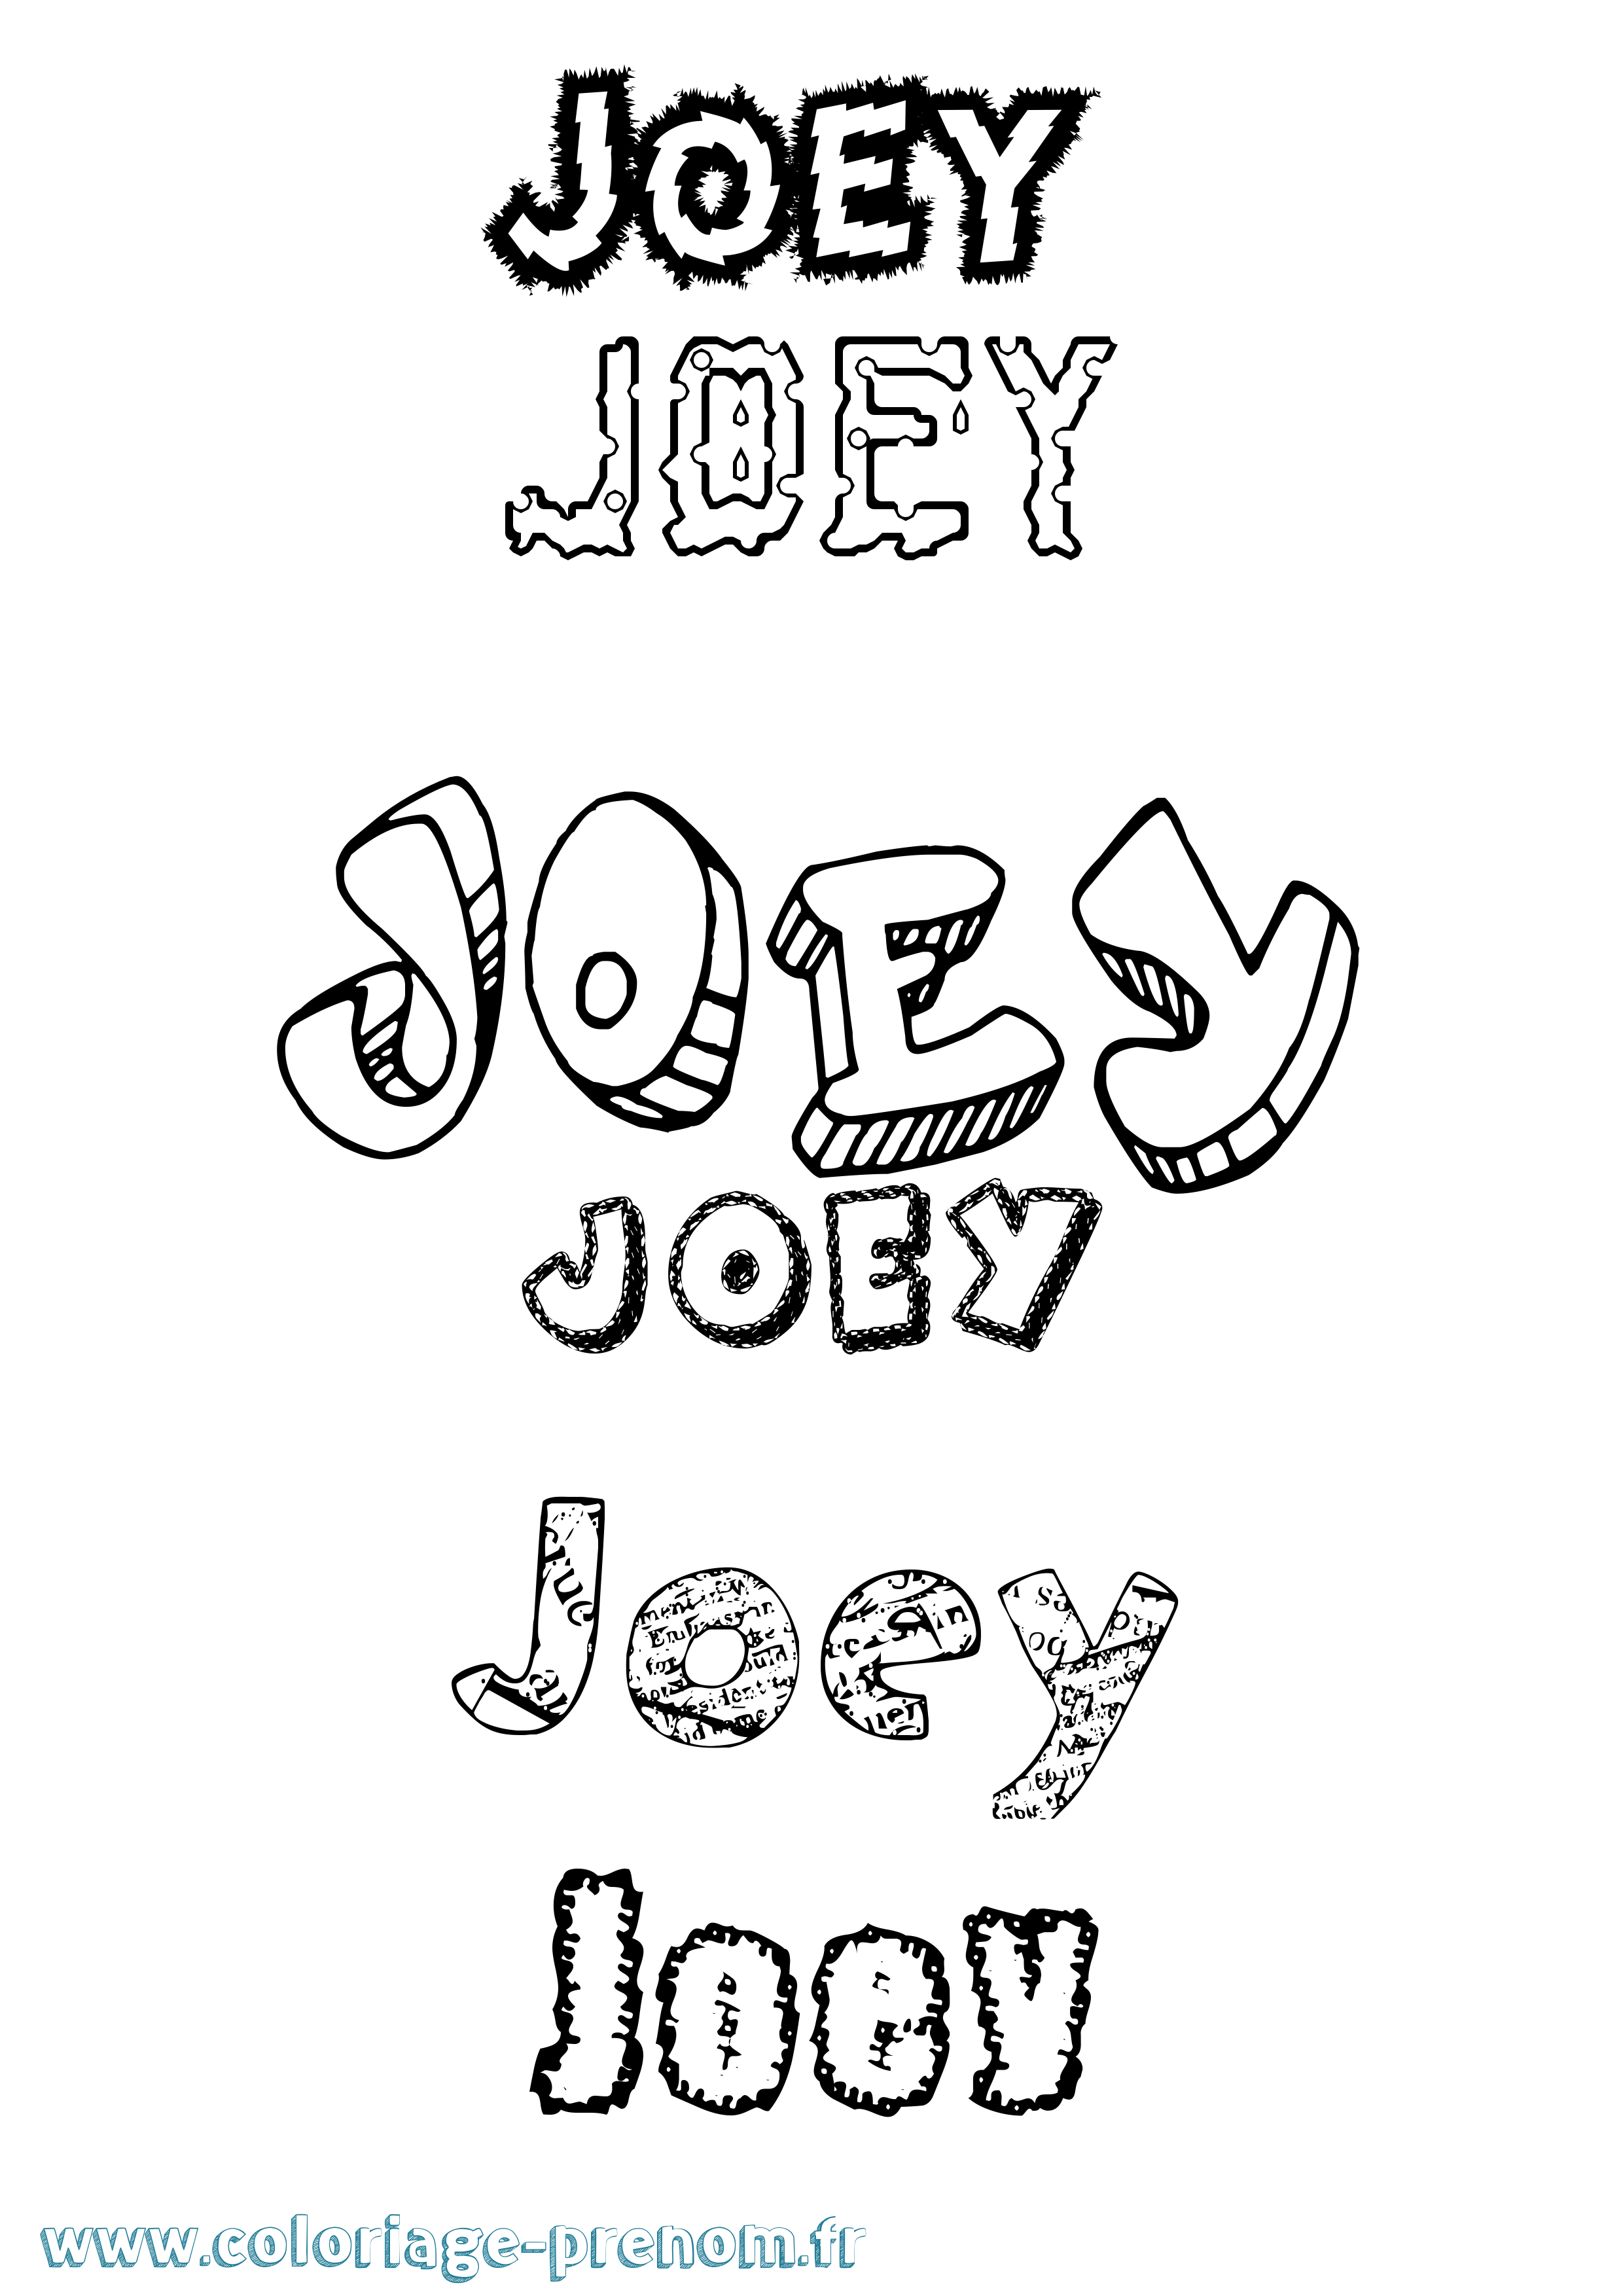 Coloriage prénom Joey Destructuré